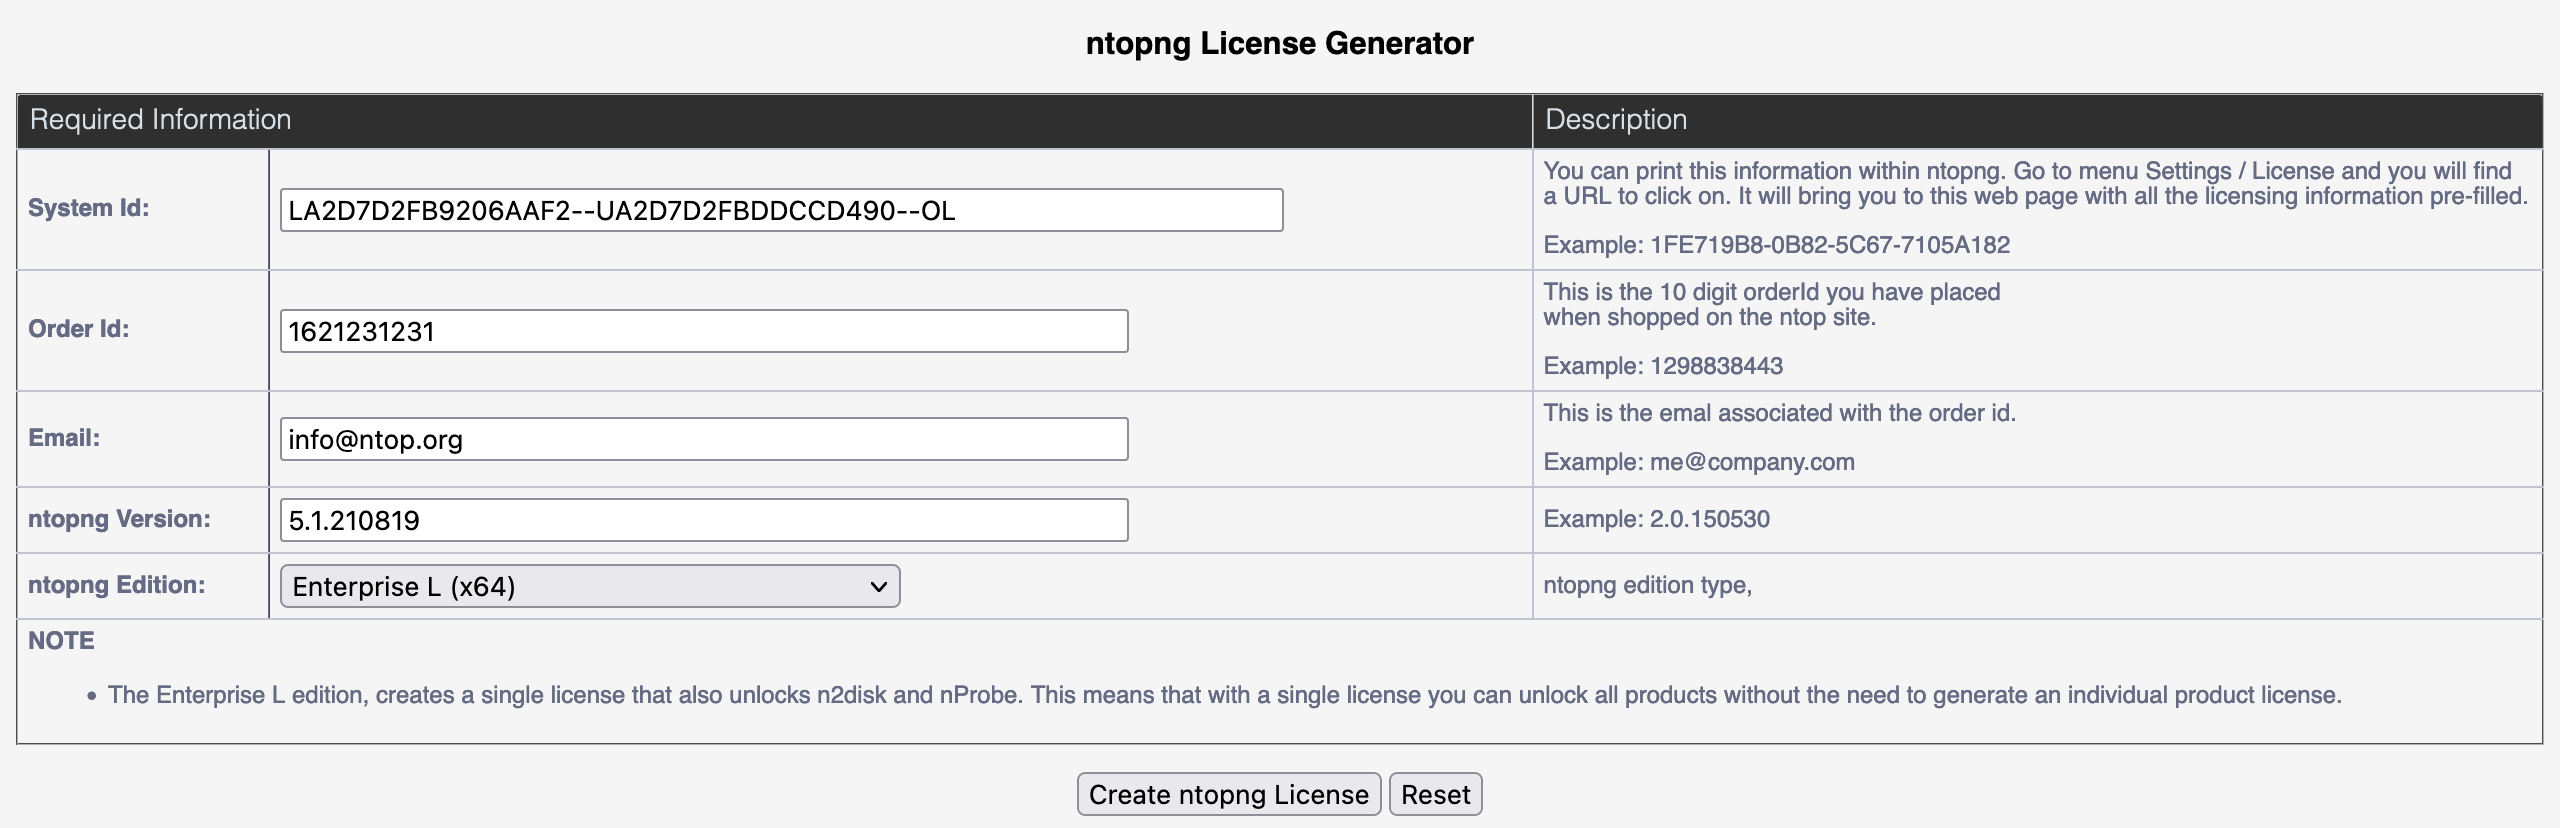 License Generation Example